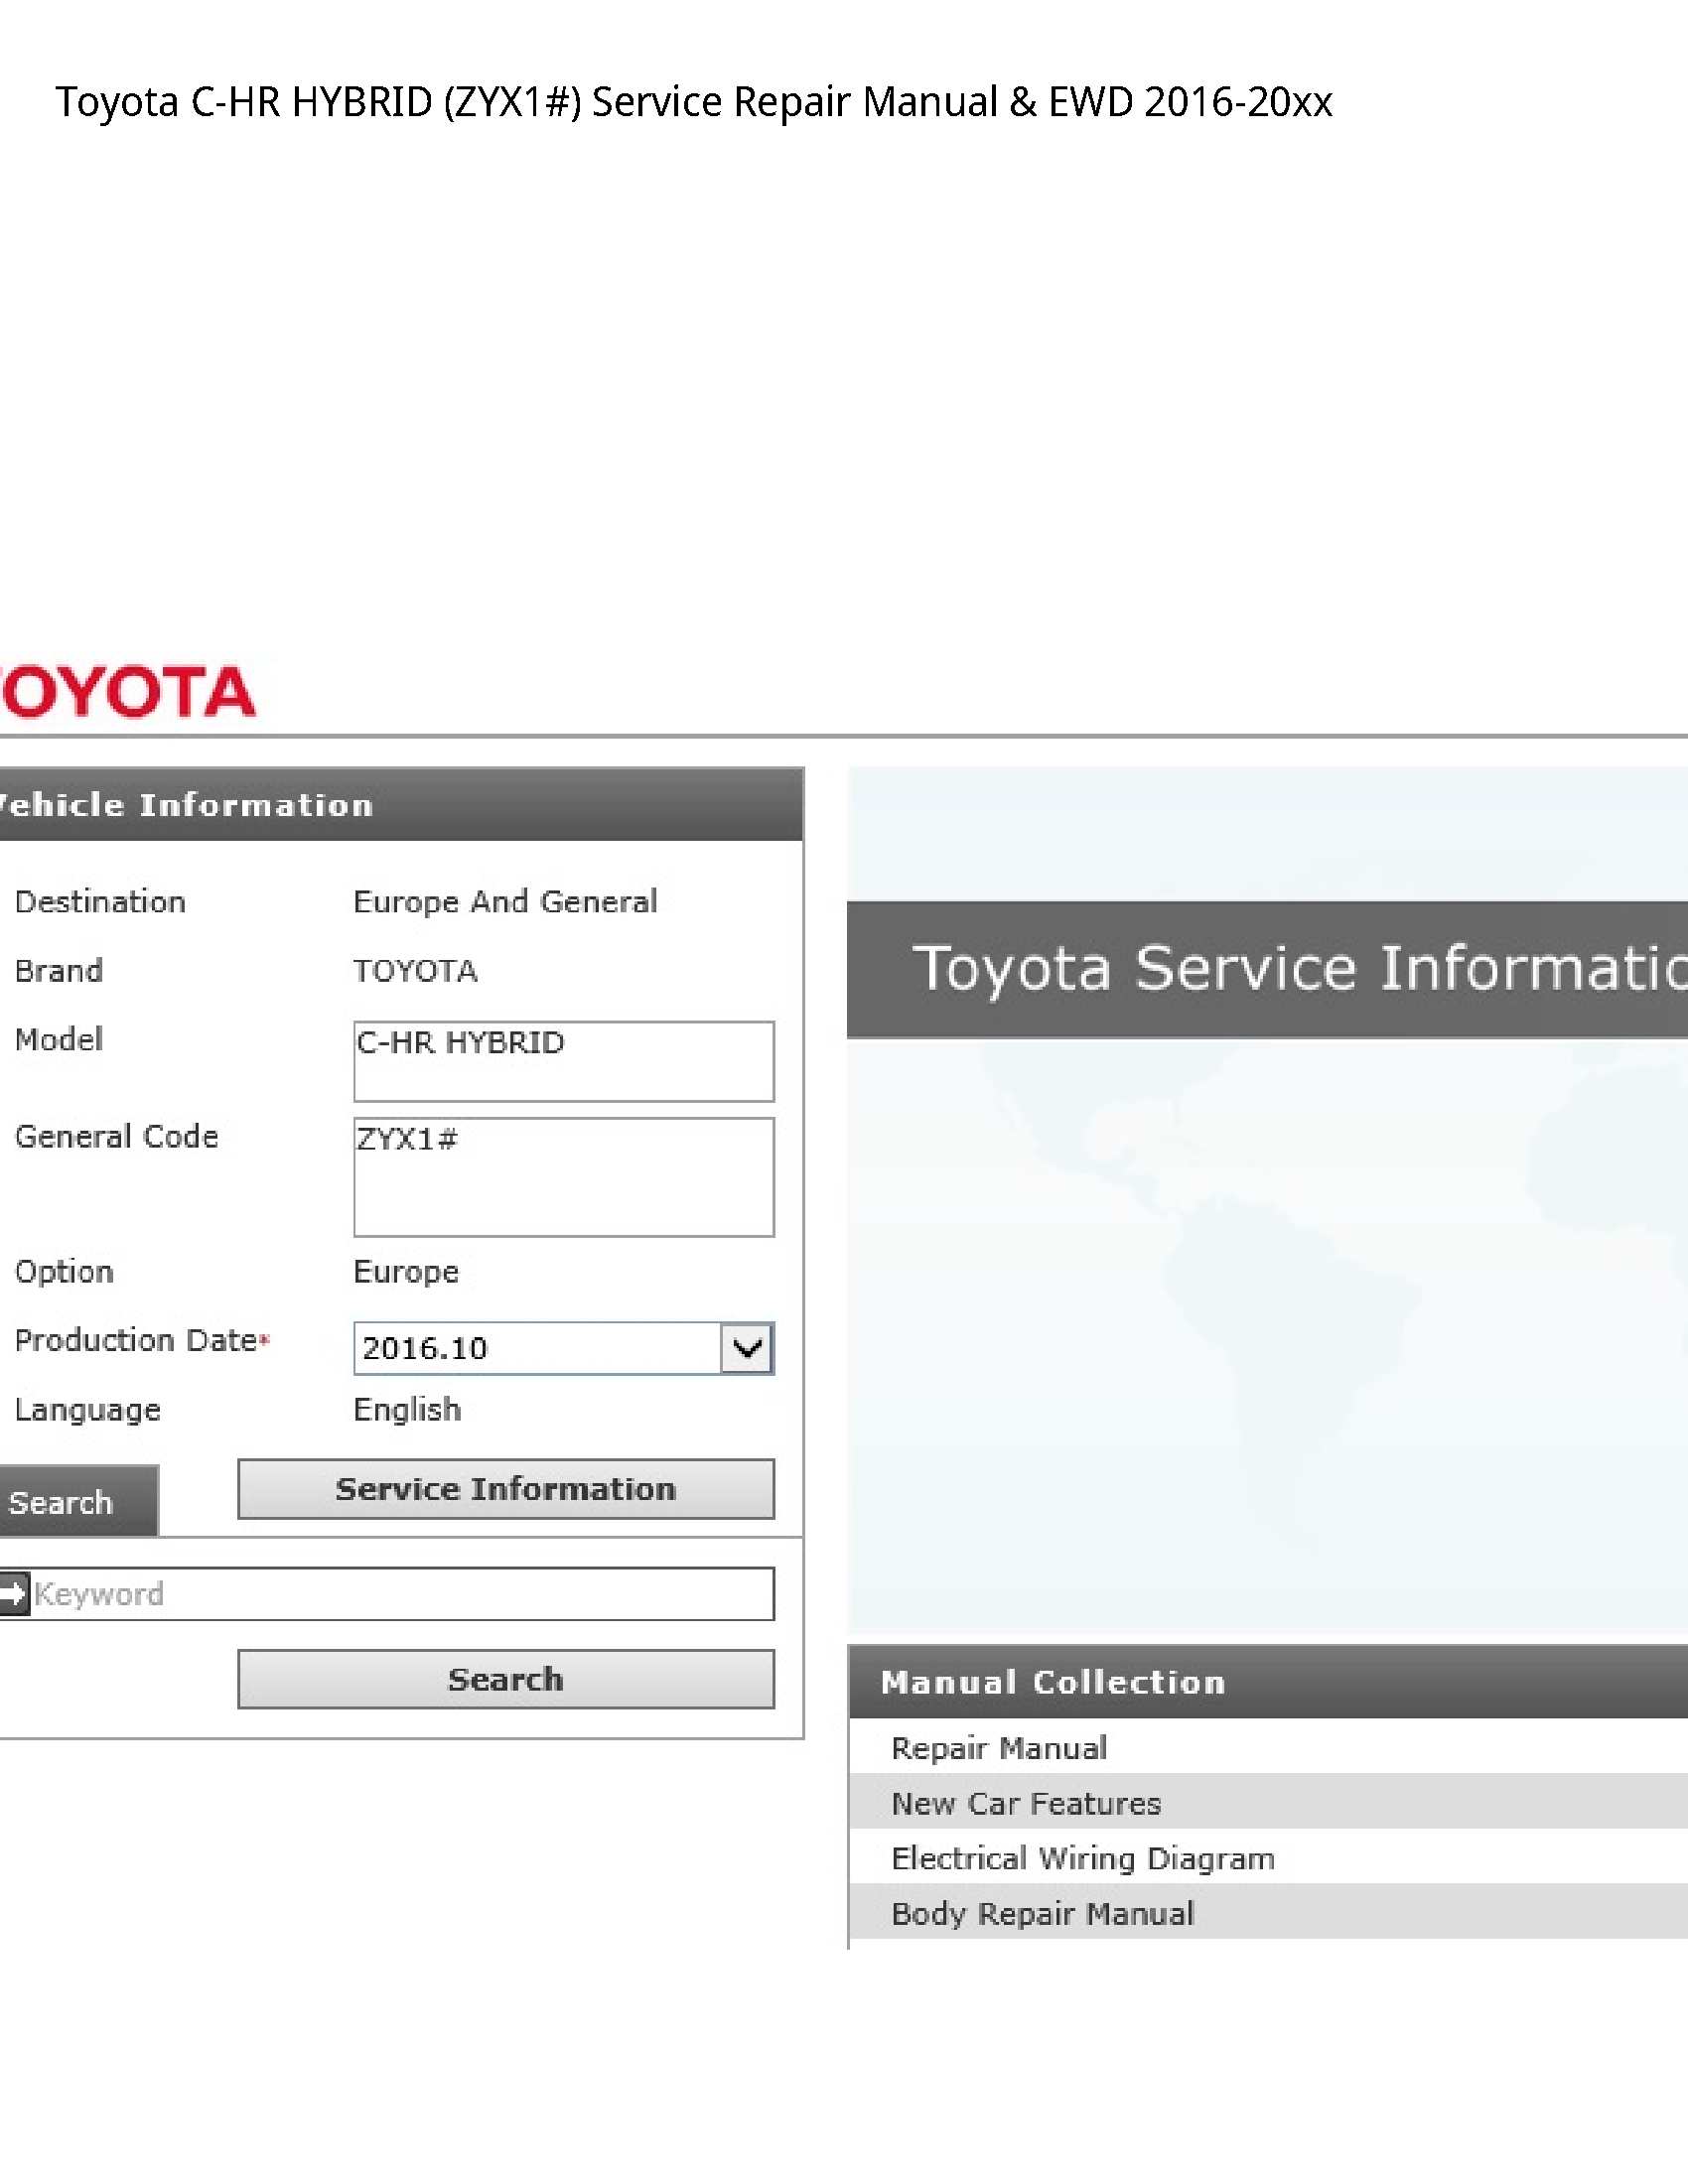 Toyota (ZYX1#) C-HR HYBRID manual